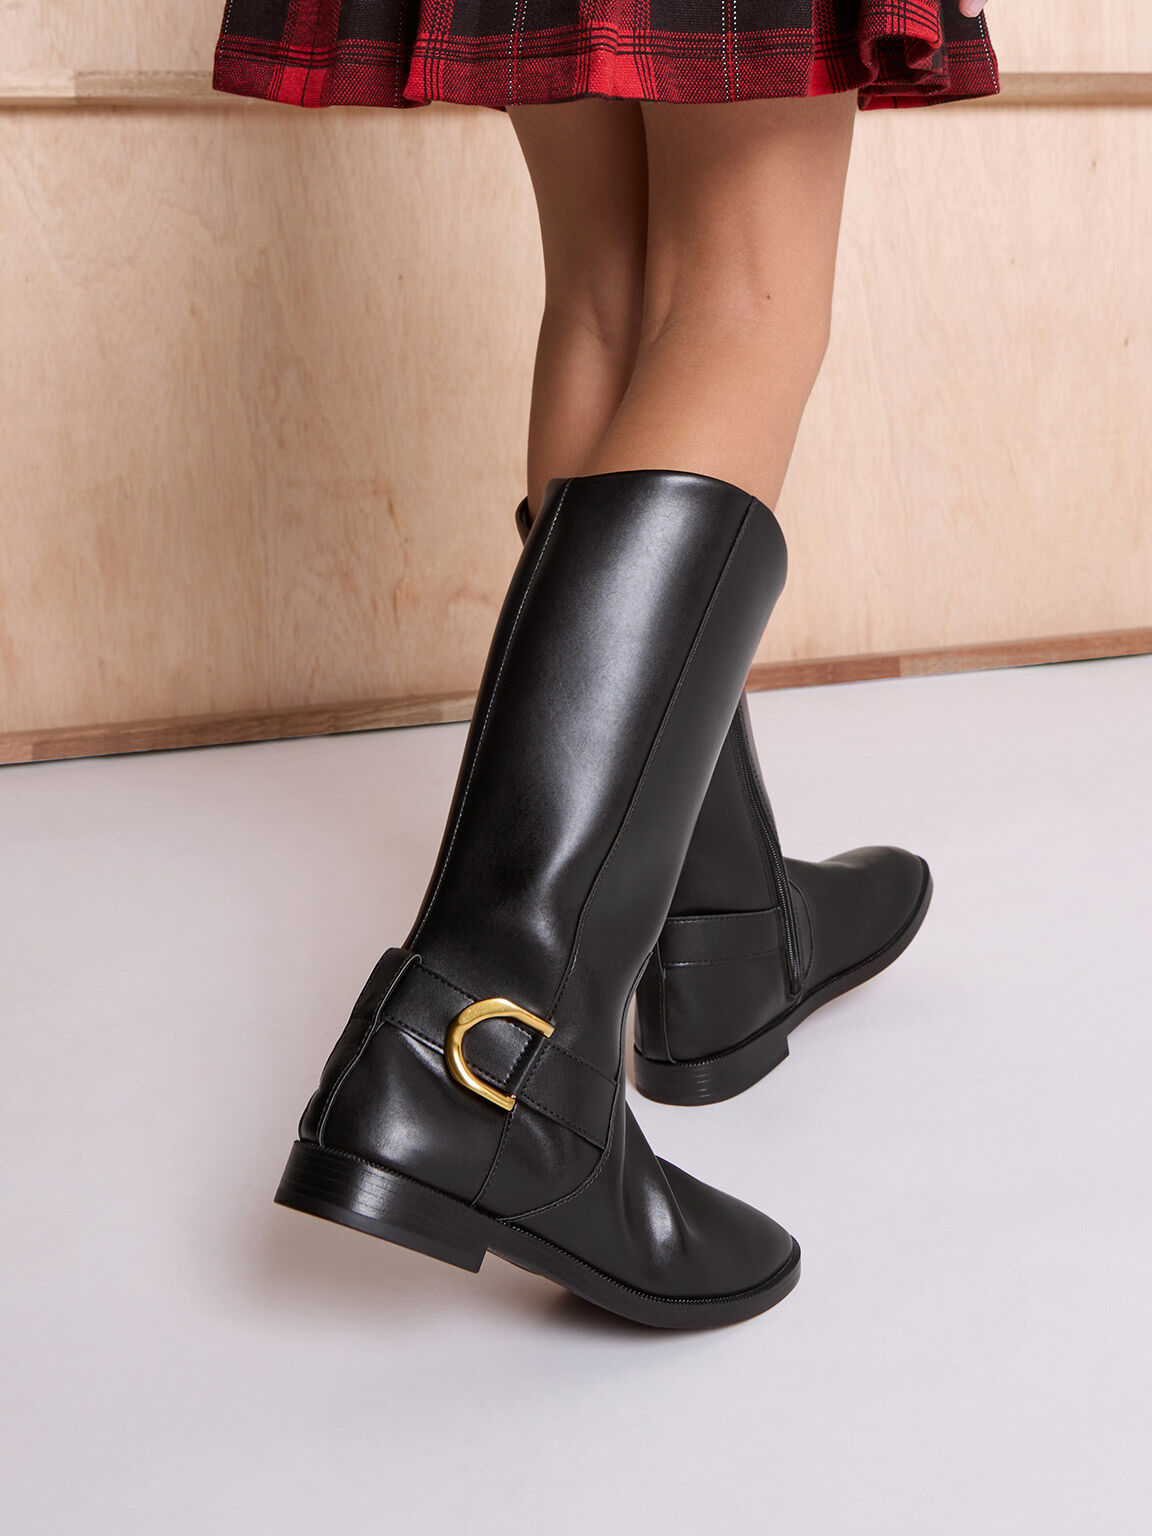 Girls' Gabine Knee-High Boots, Black, hi-res